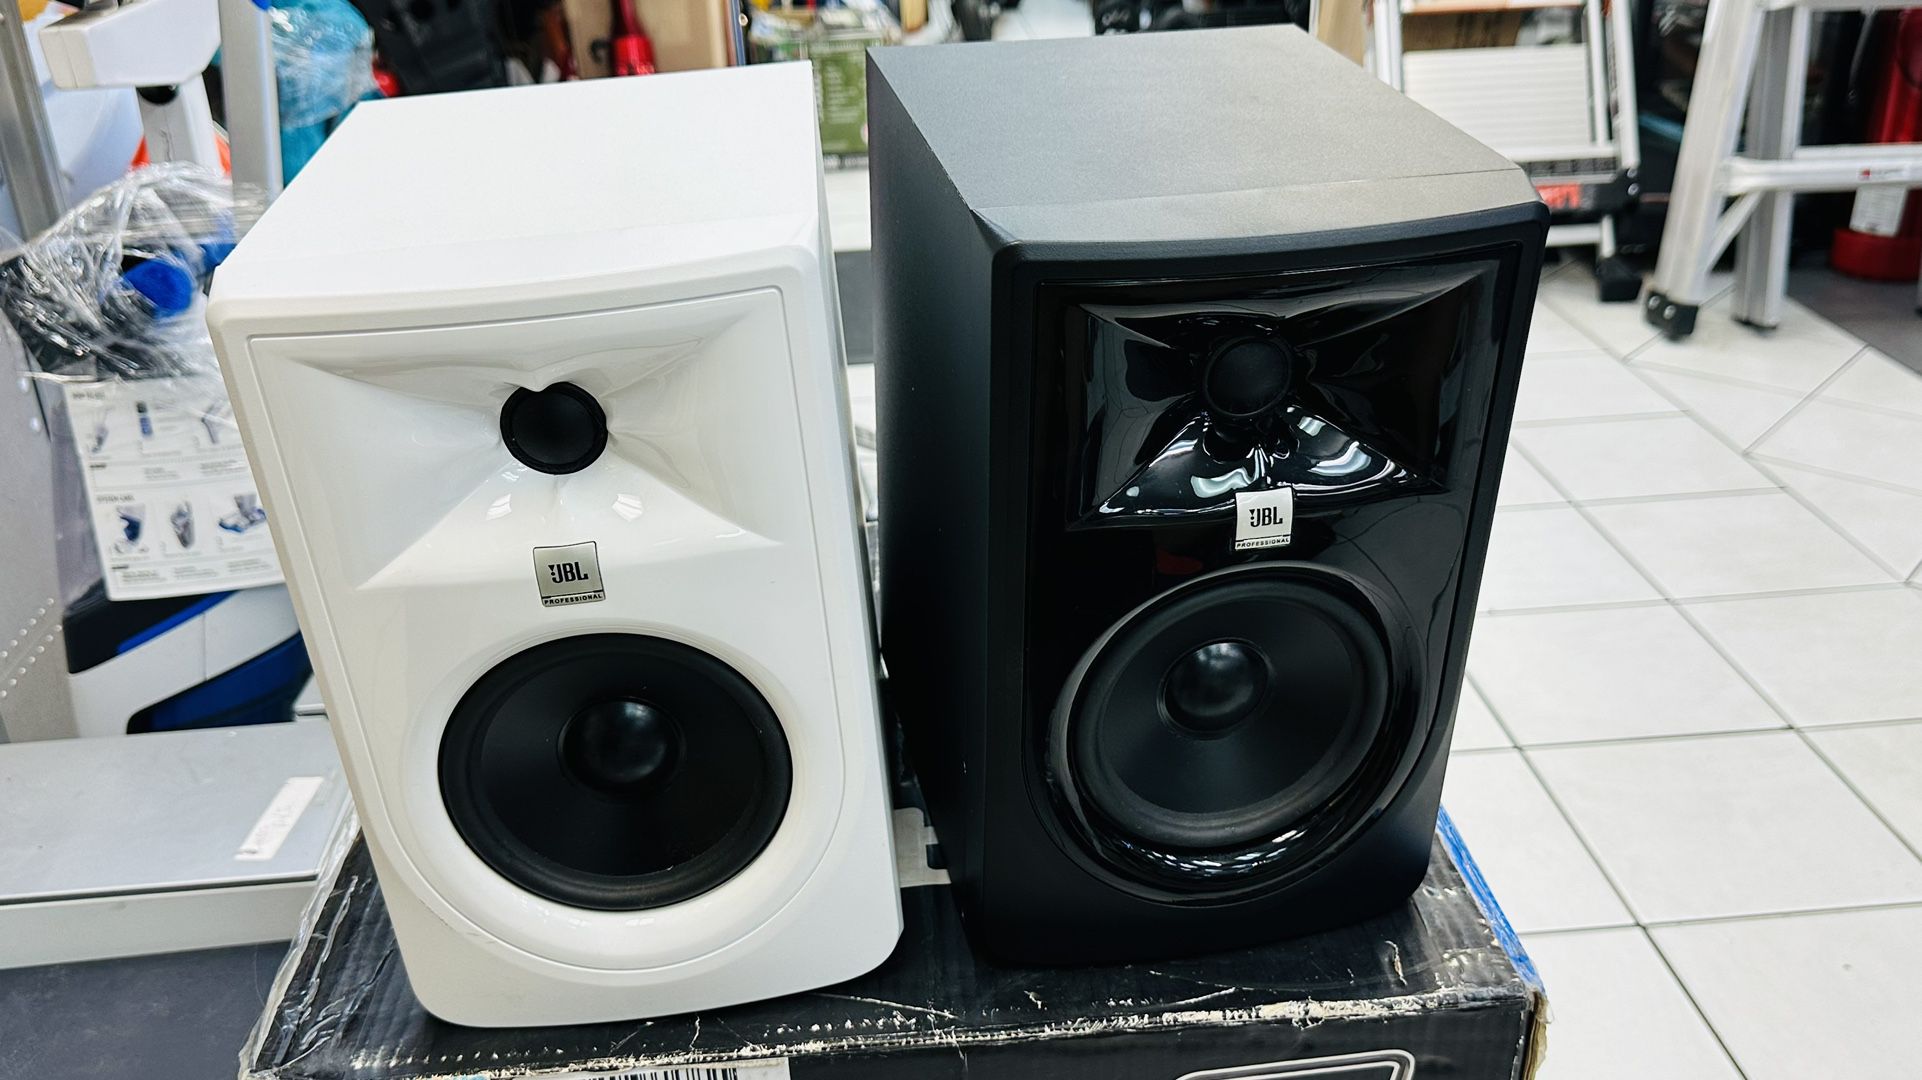 PAIR of JBL Professional 3 Series Powered Studio Monitors speakers 305P MKII